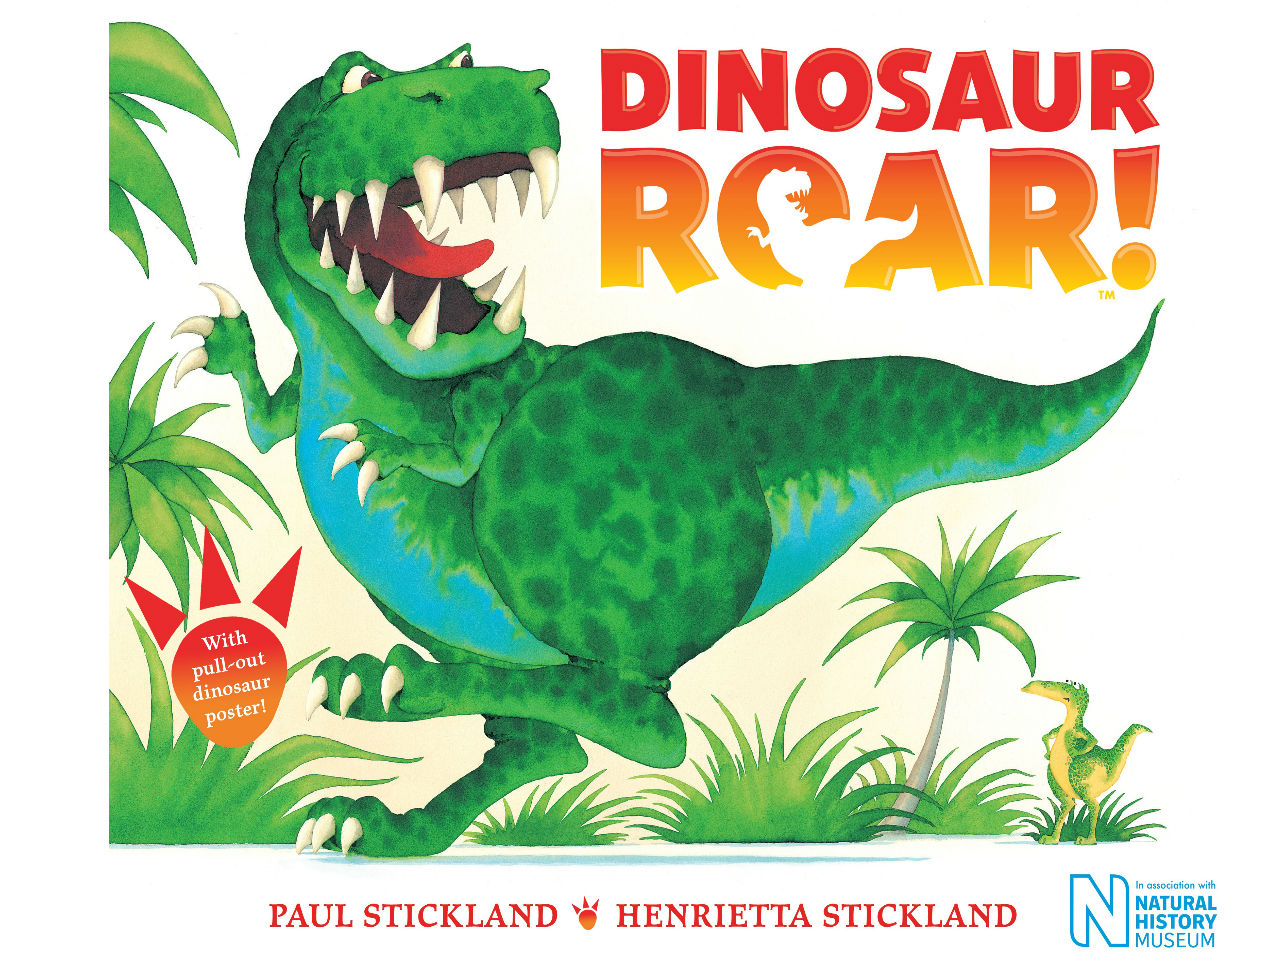 Book cover for dinosaur roar with green dinosaur